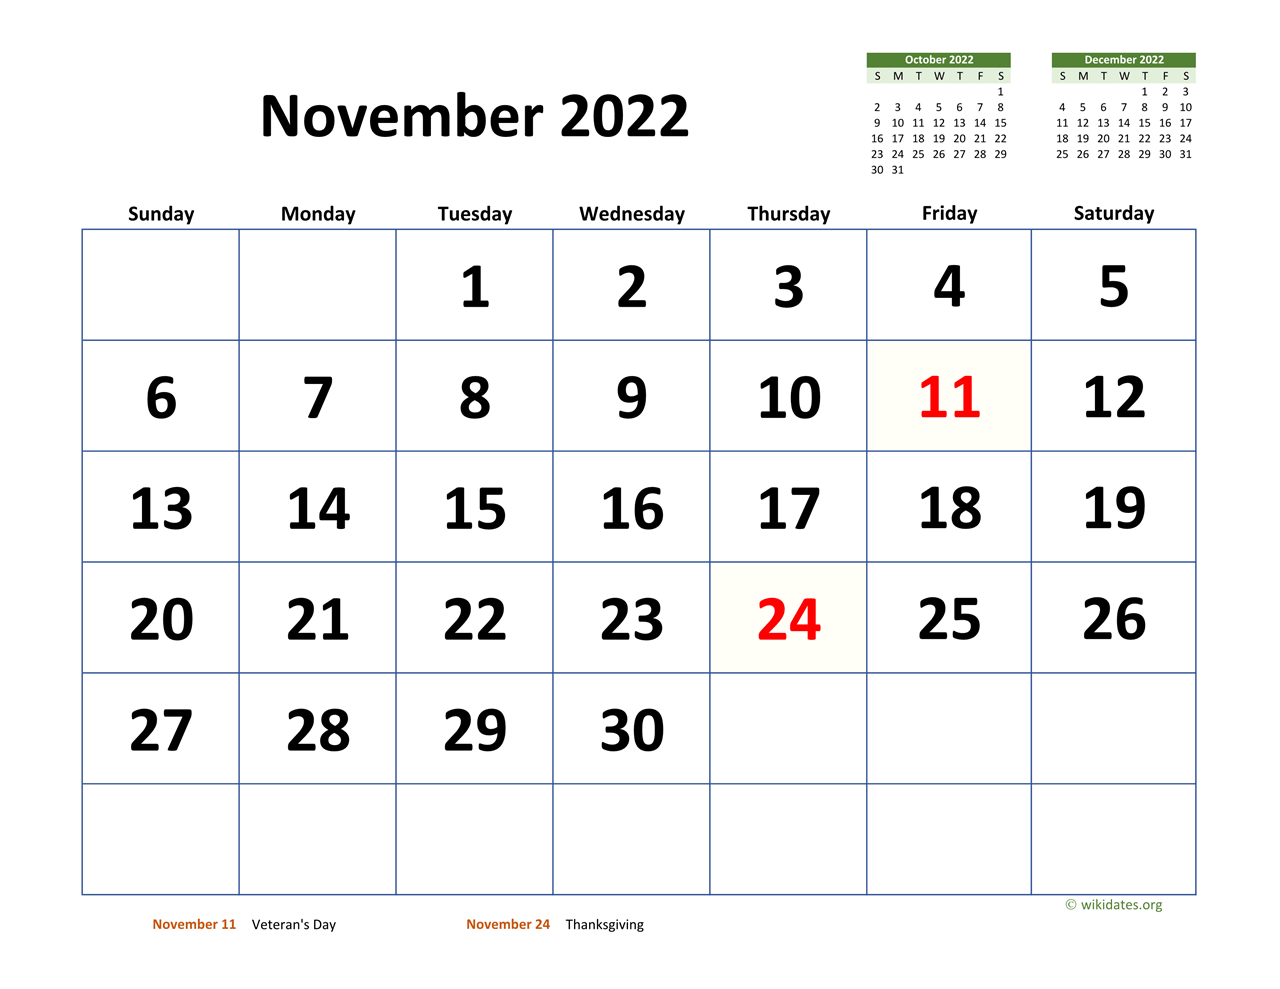 Oct And Nov 2022 Calendar November 2022 Calendar With Extra-Large Dates | Wikidates.org